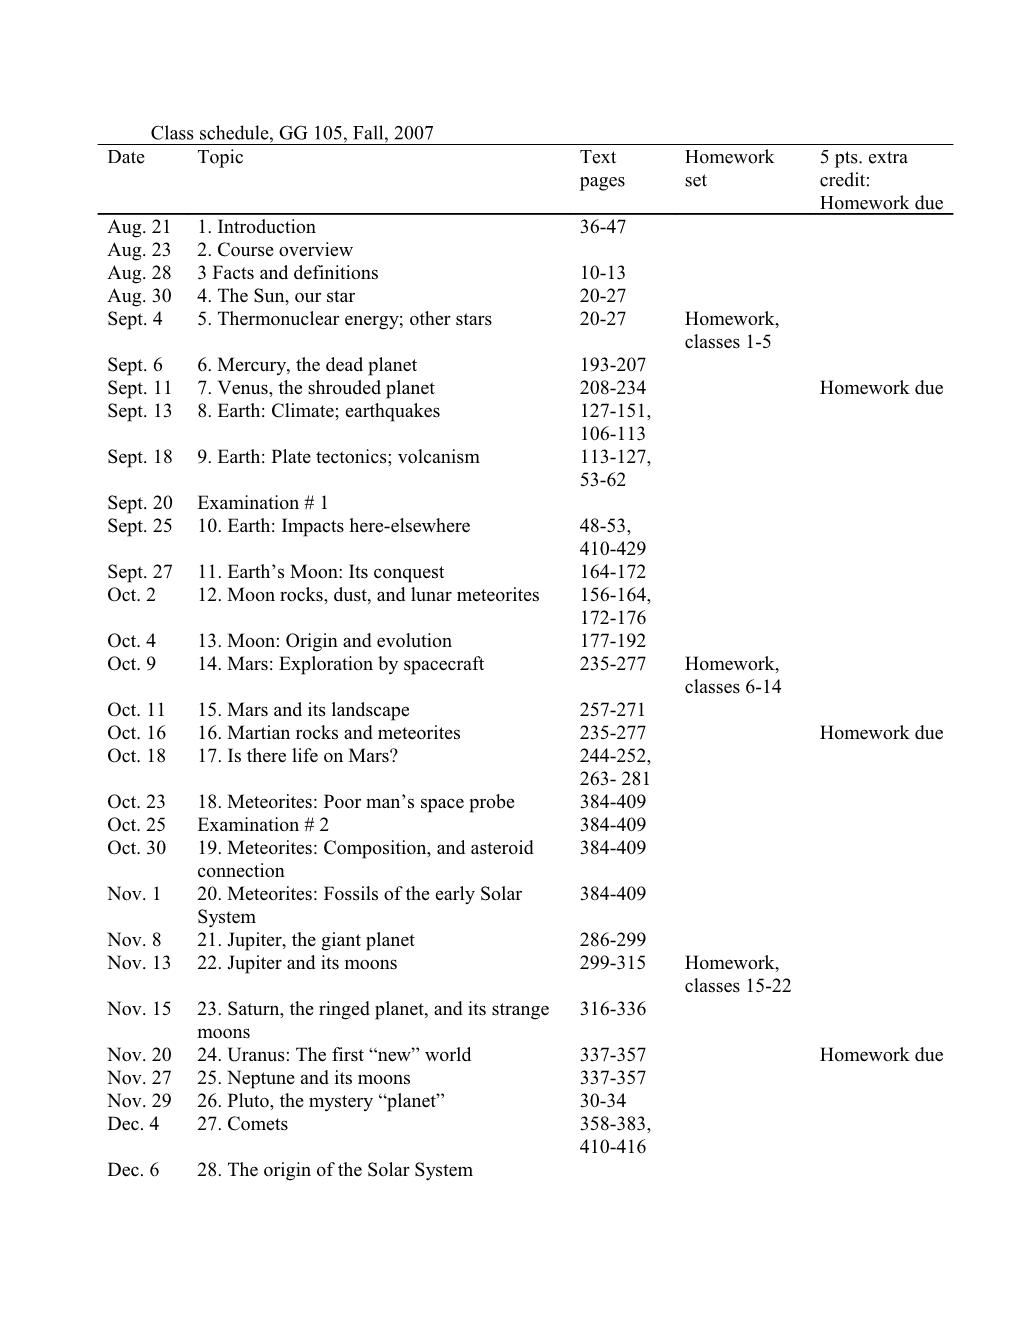 Class Schedule, GG 105, Fall, 2007